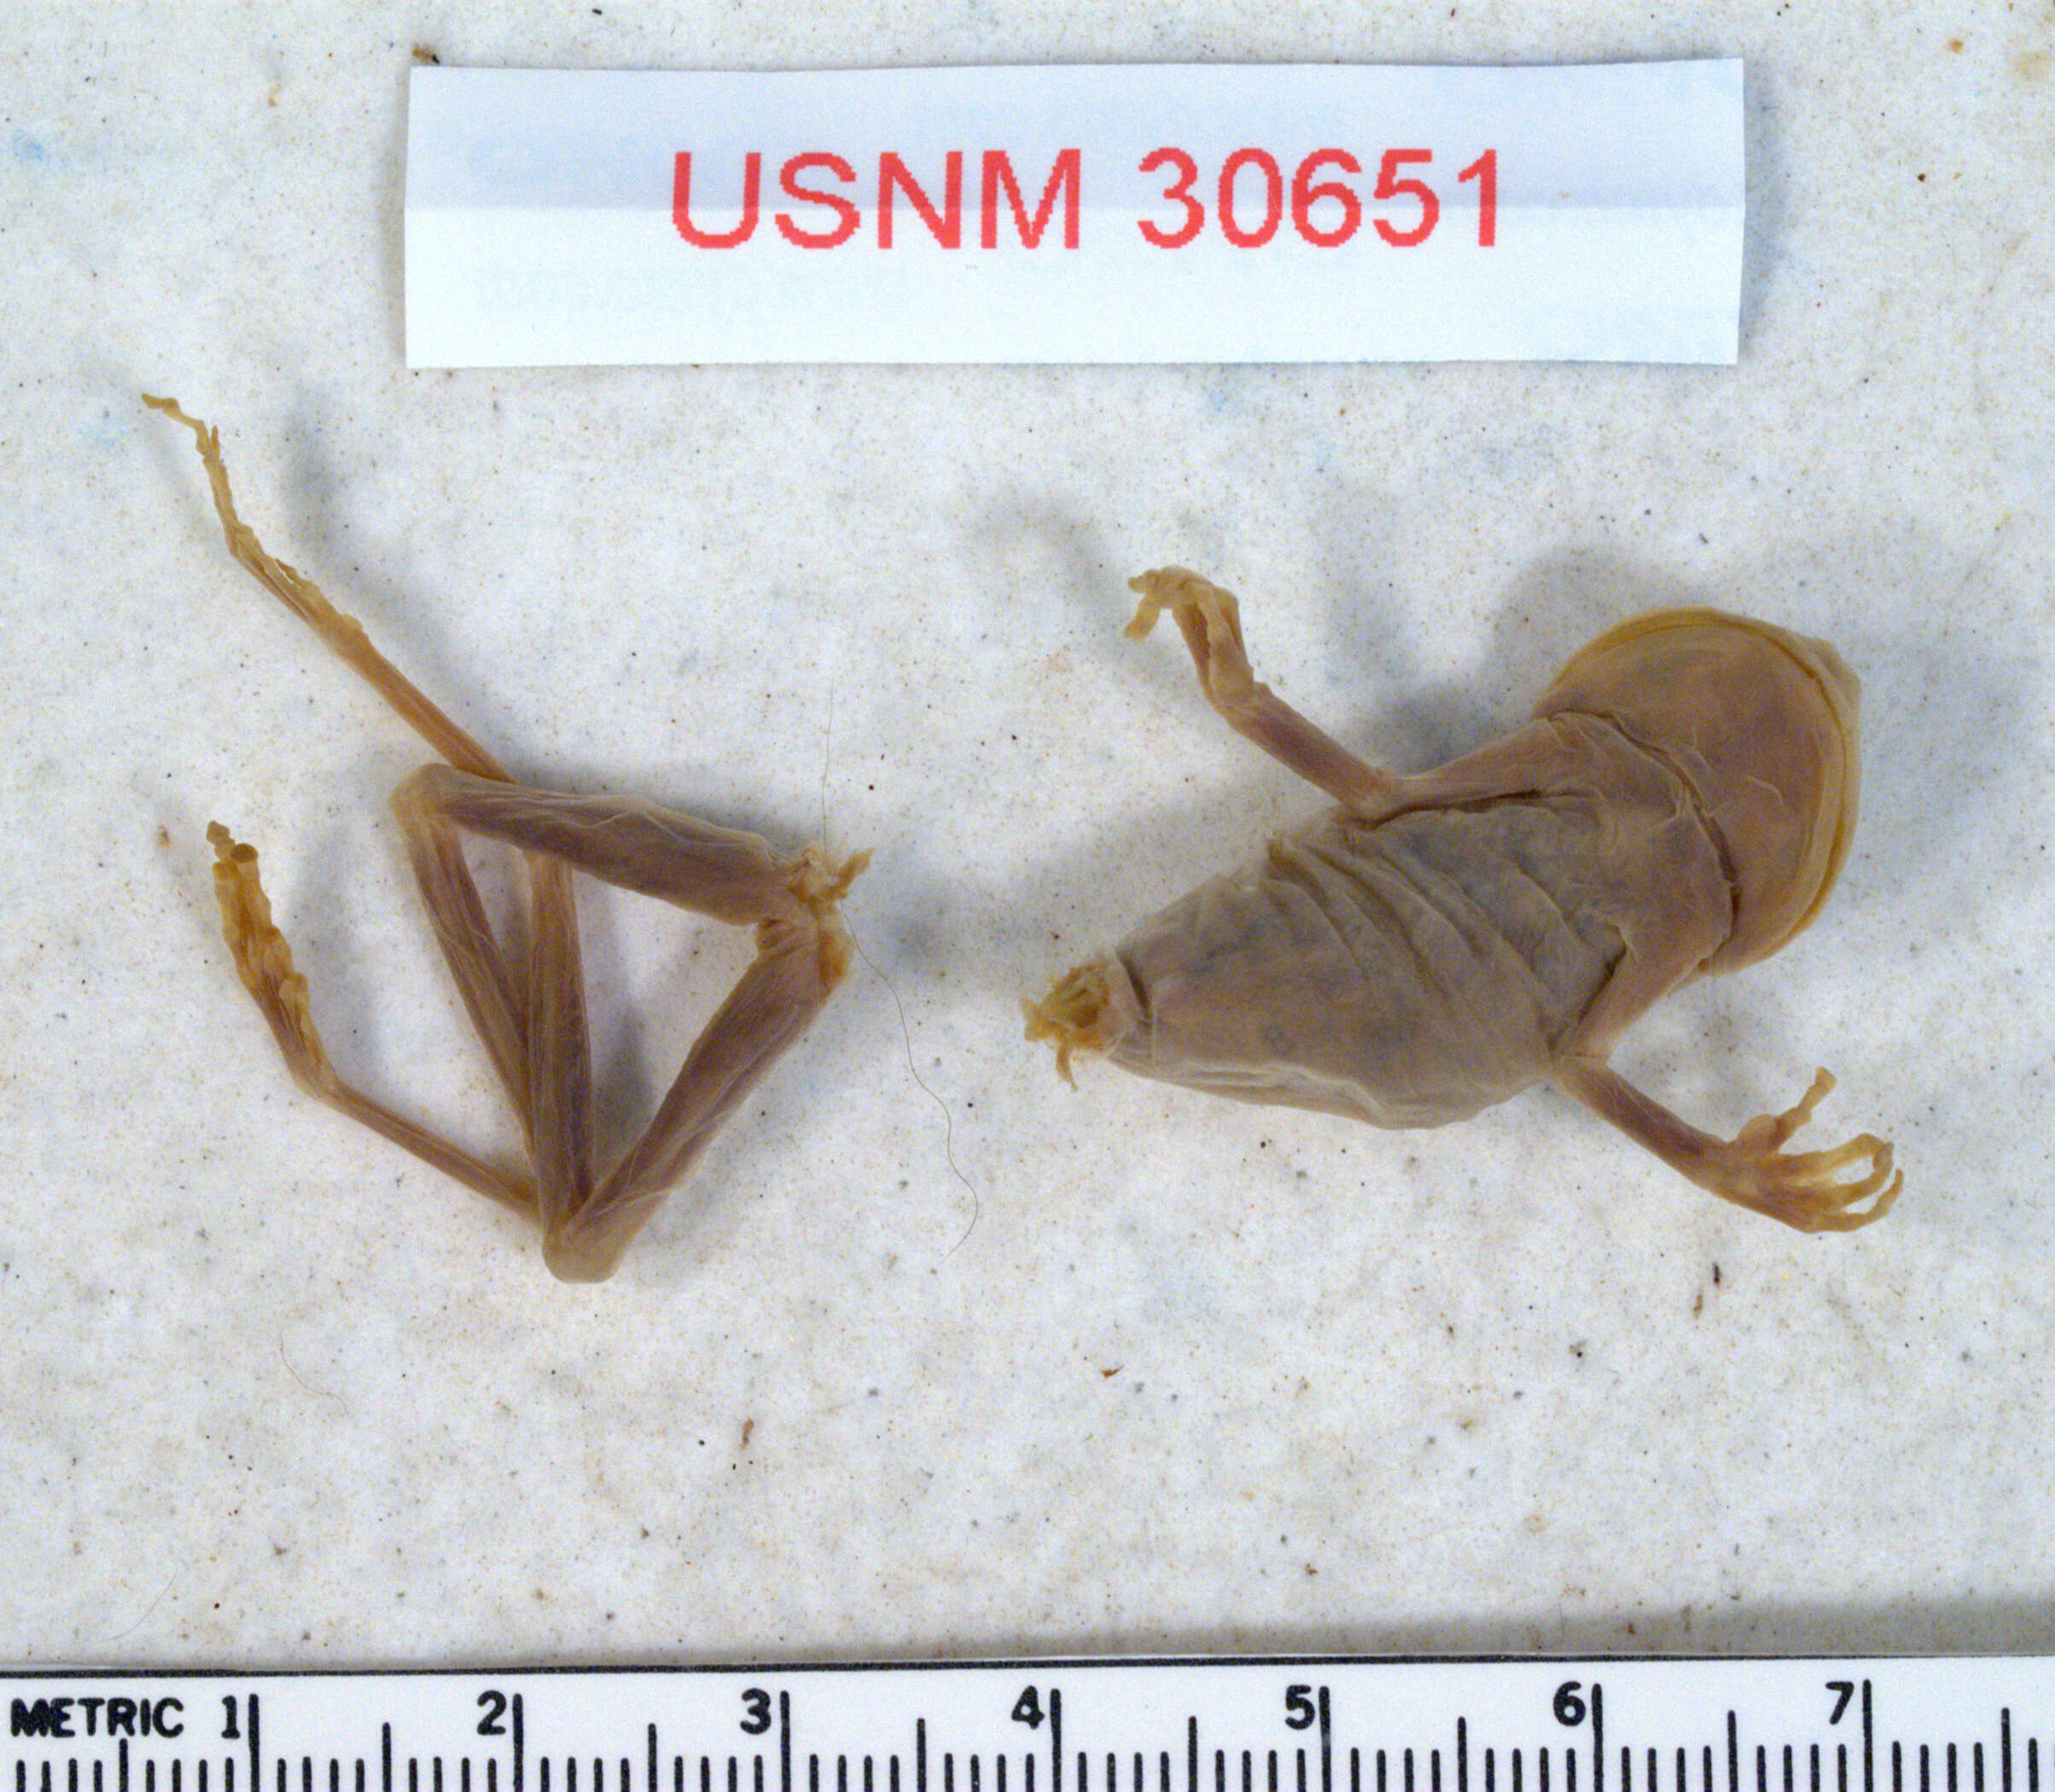 Duellmanohyla uranochroa (Cope 1875) resmi